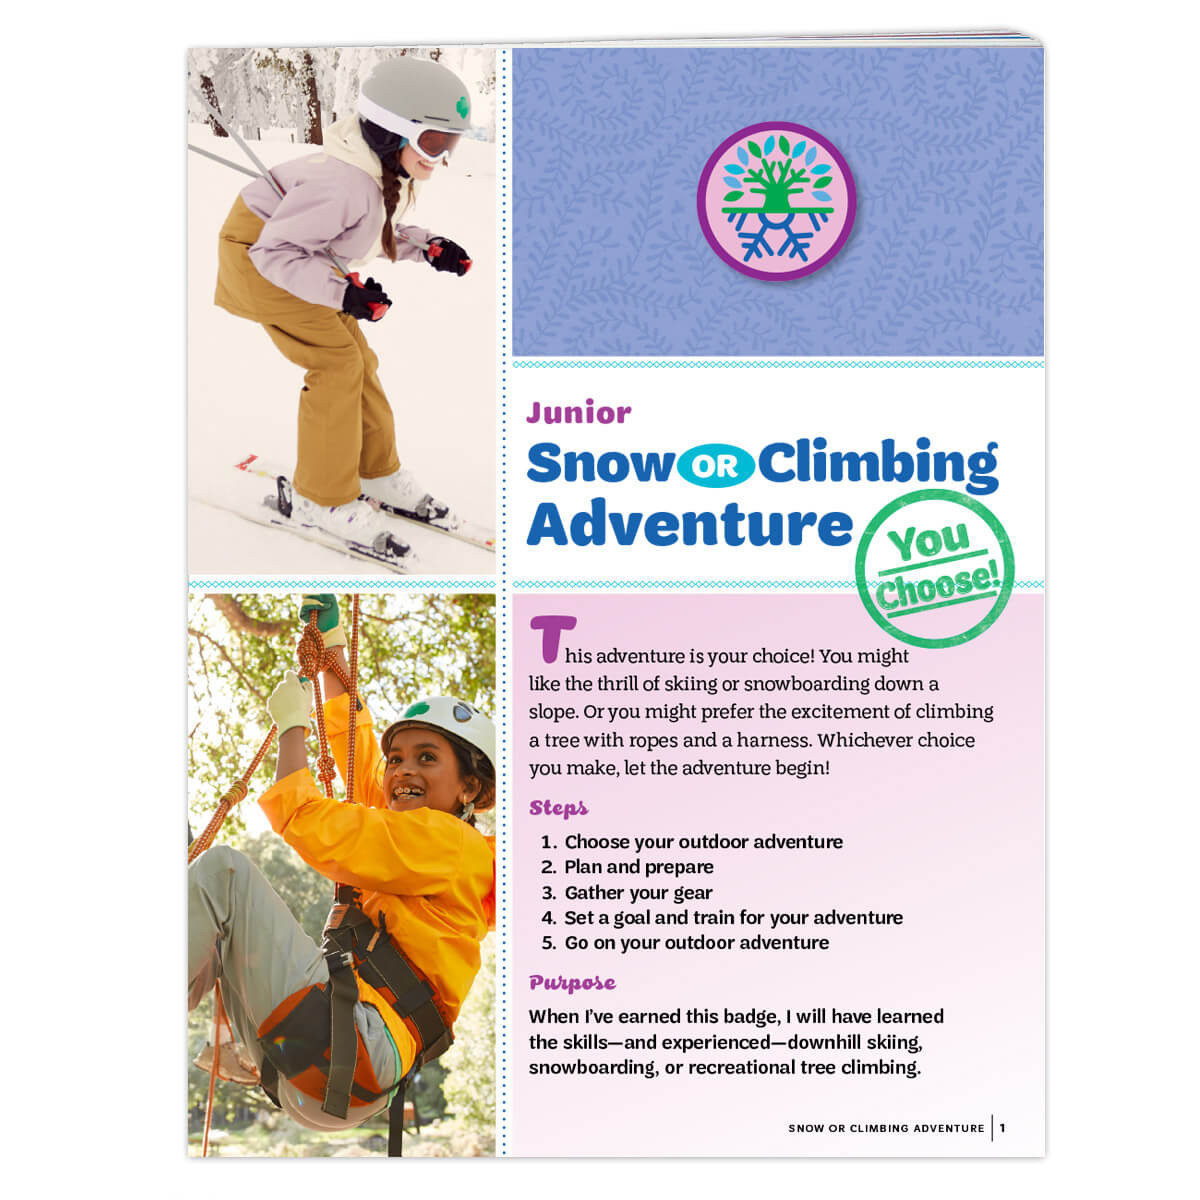 Jr. Snow or Climbing Adventure REQ